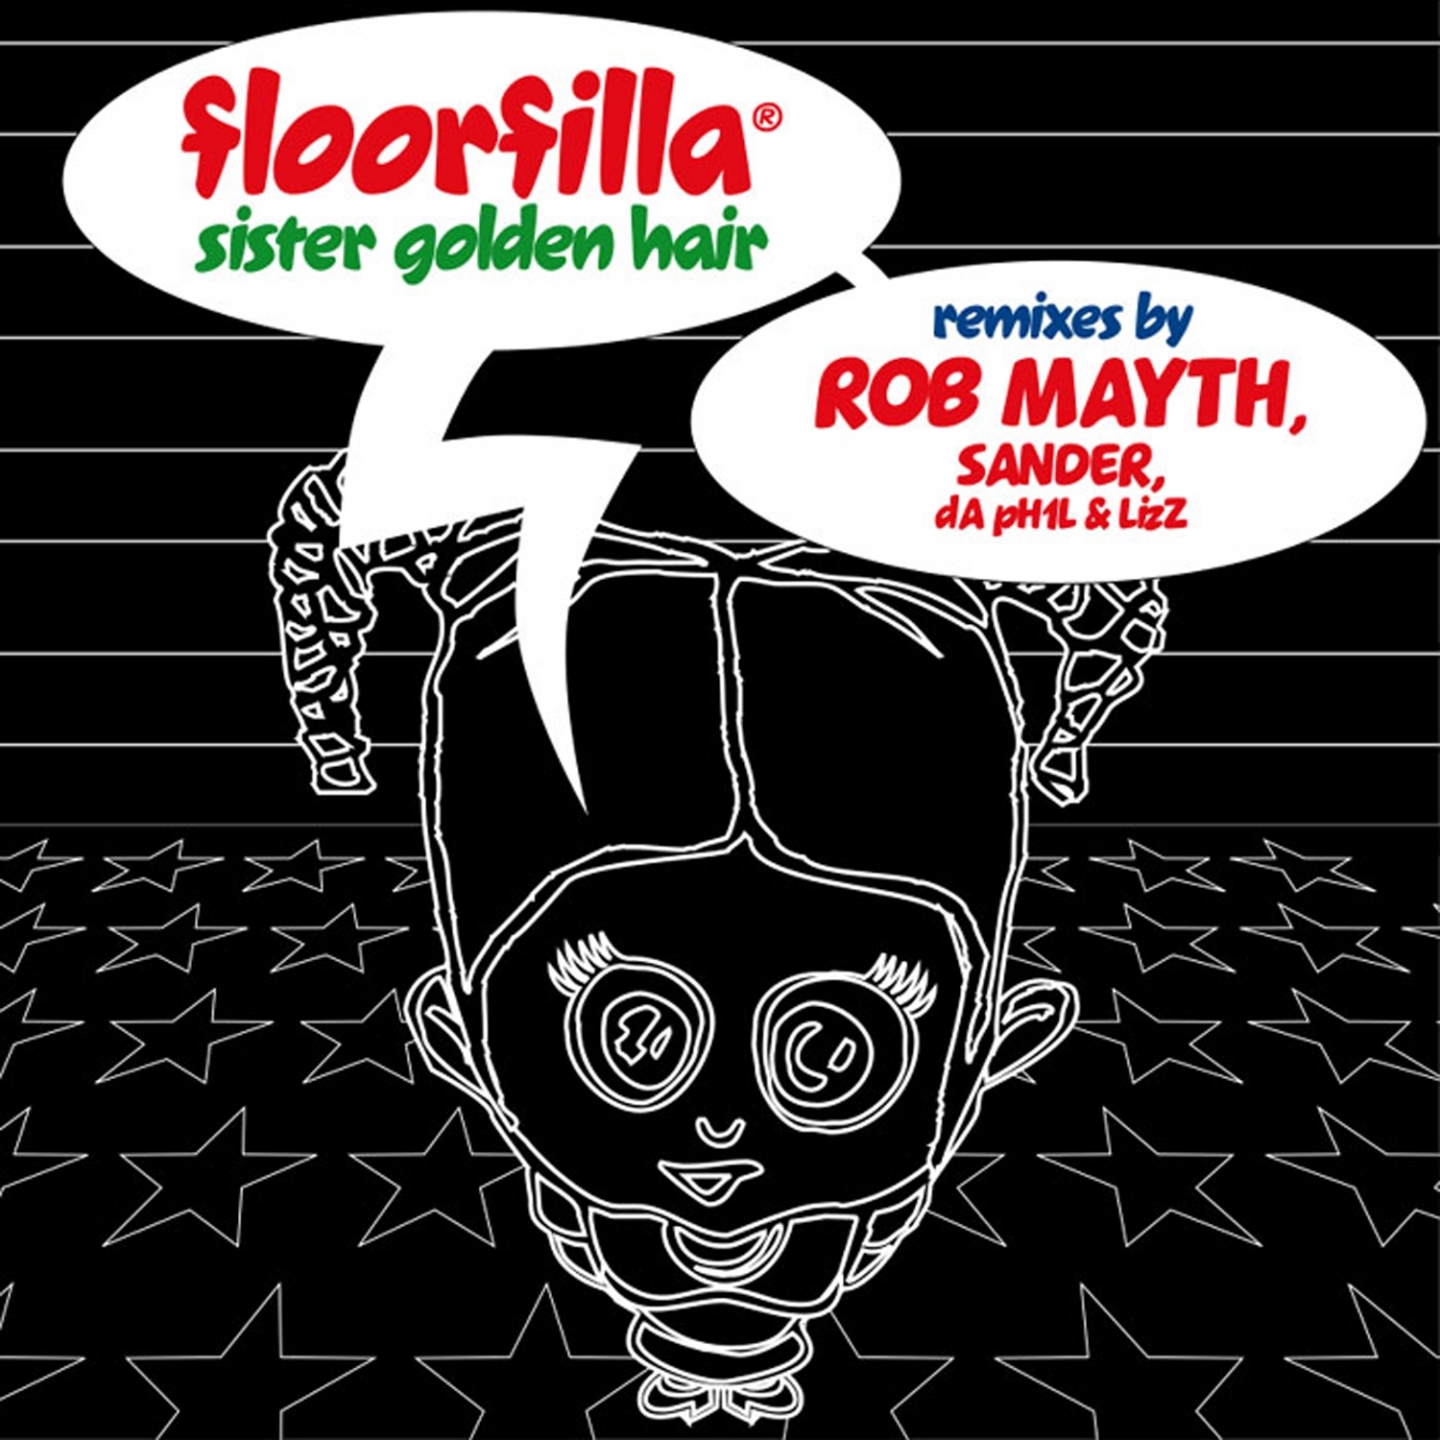 Sister Golden Hair Remixes